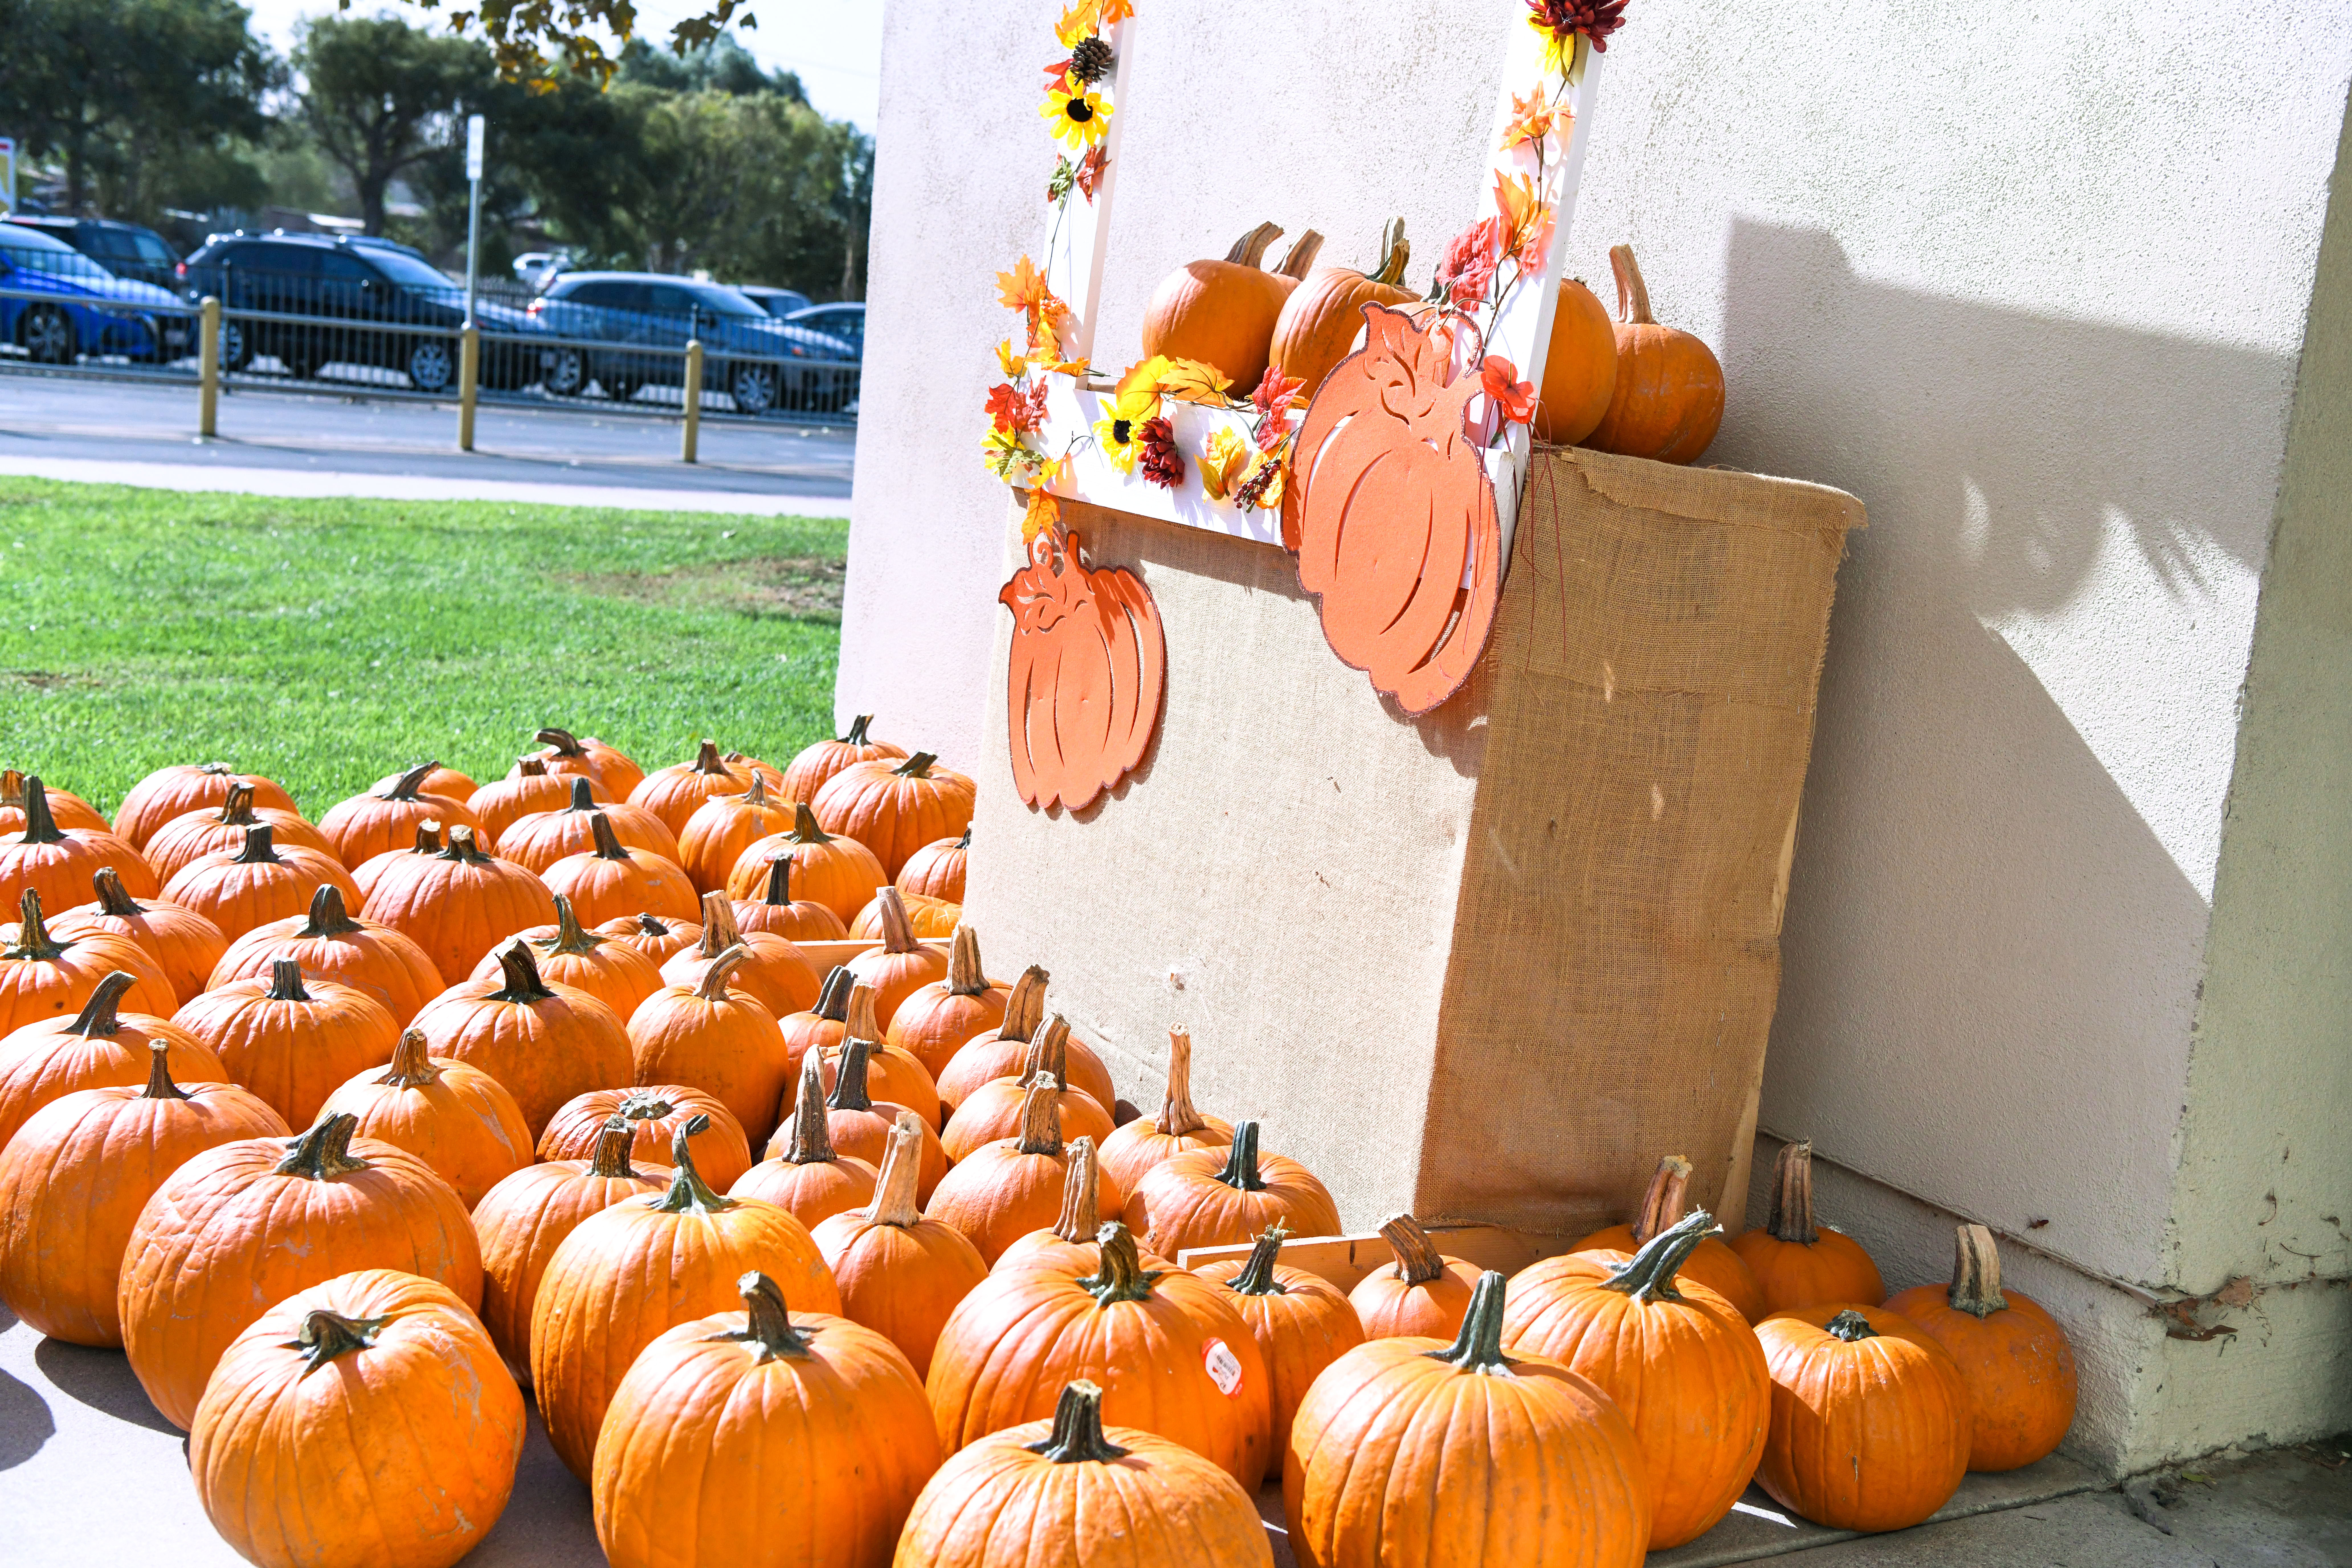 Pumpkins surround a festive stand